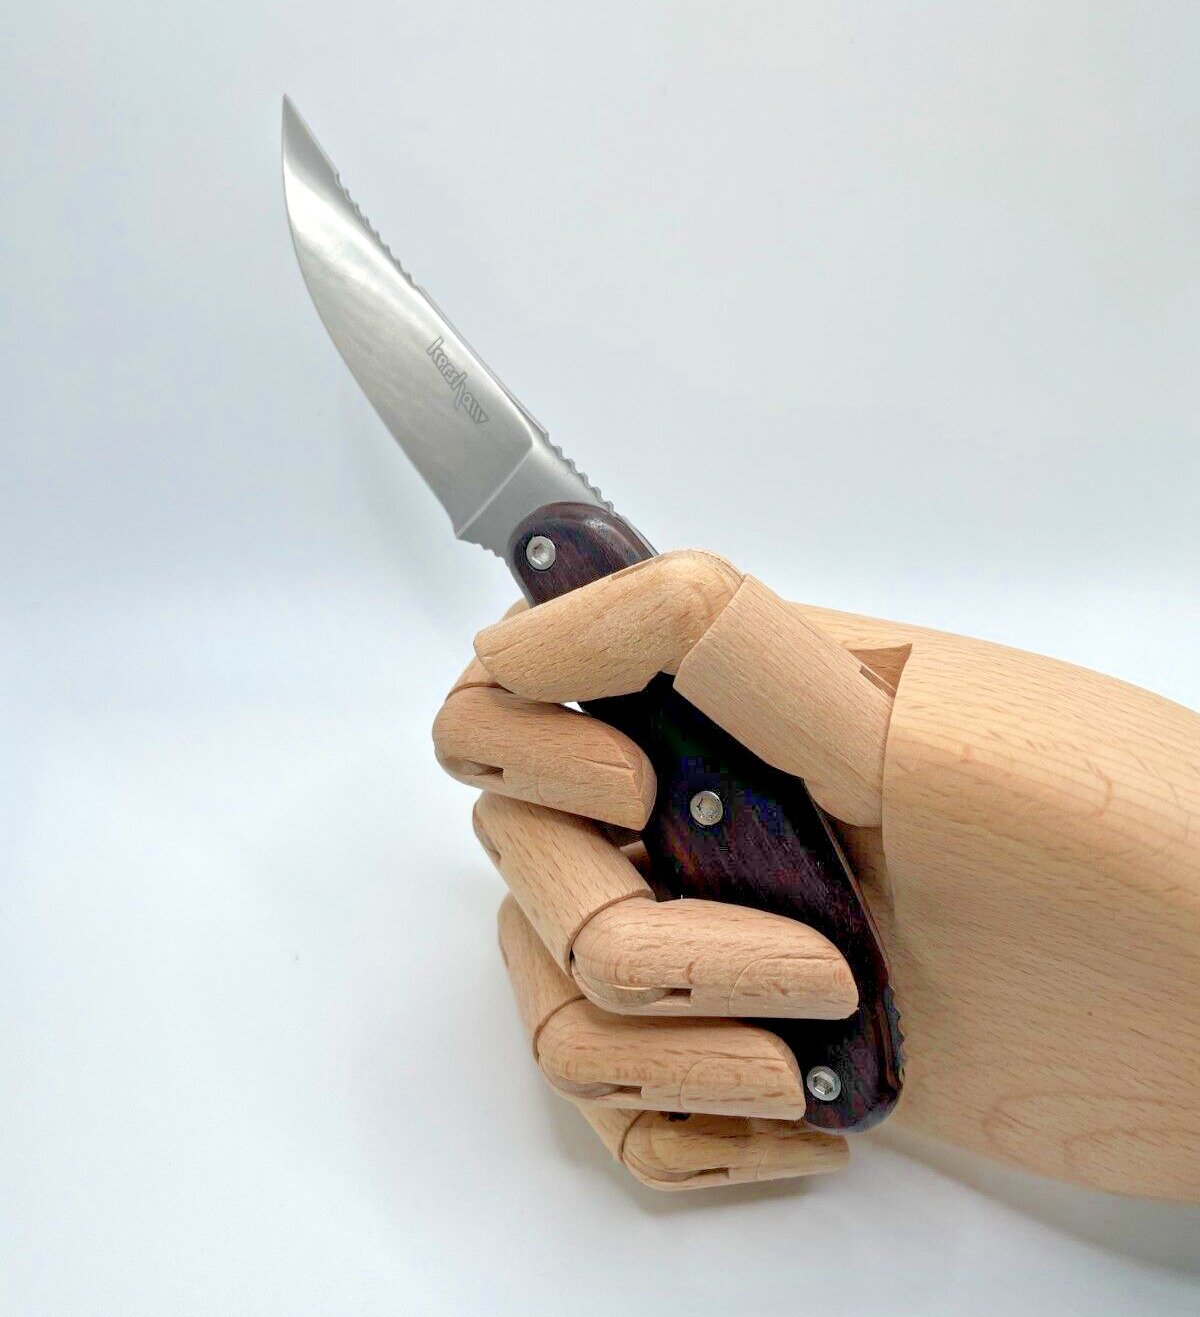 Kershaw Knives Tom Veff Designed Kaper With Cocobolo Wood Handle - #2300 Japan